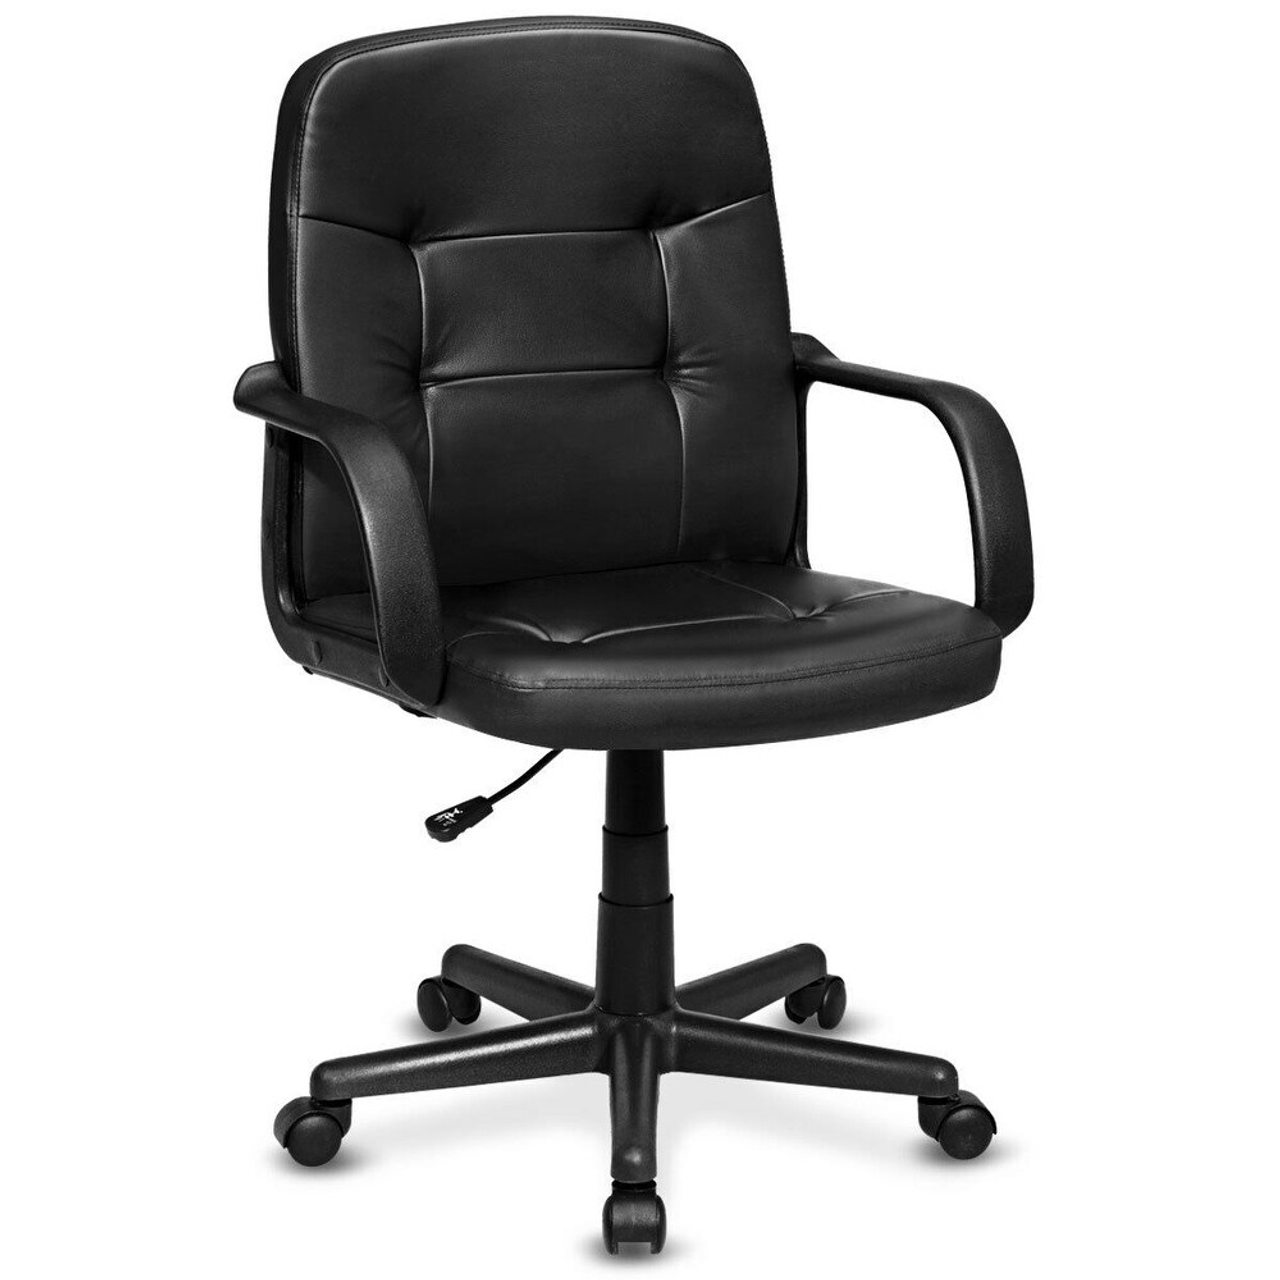 Ergonomic Mid-Back Swivel  Executive Office Chair product image